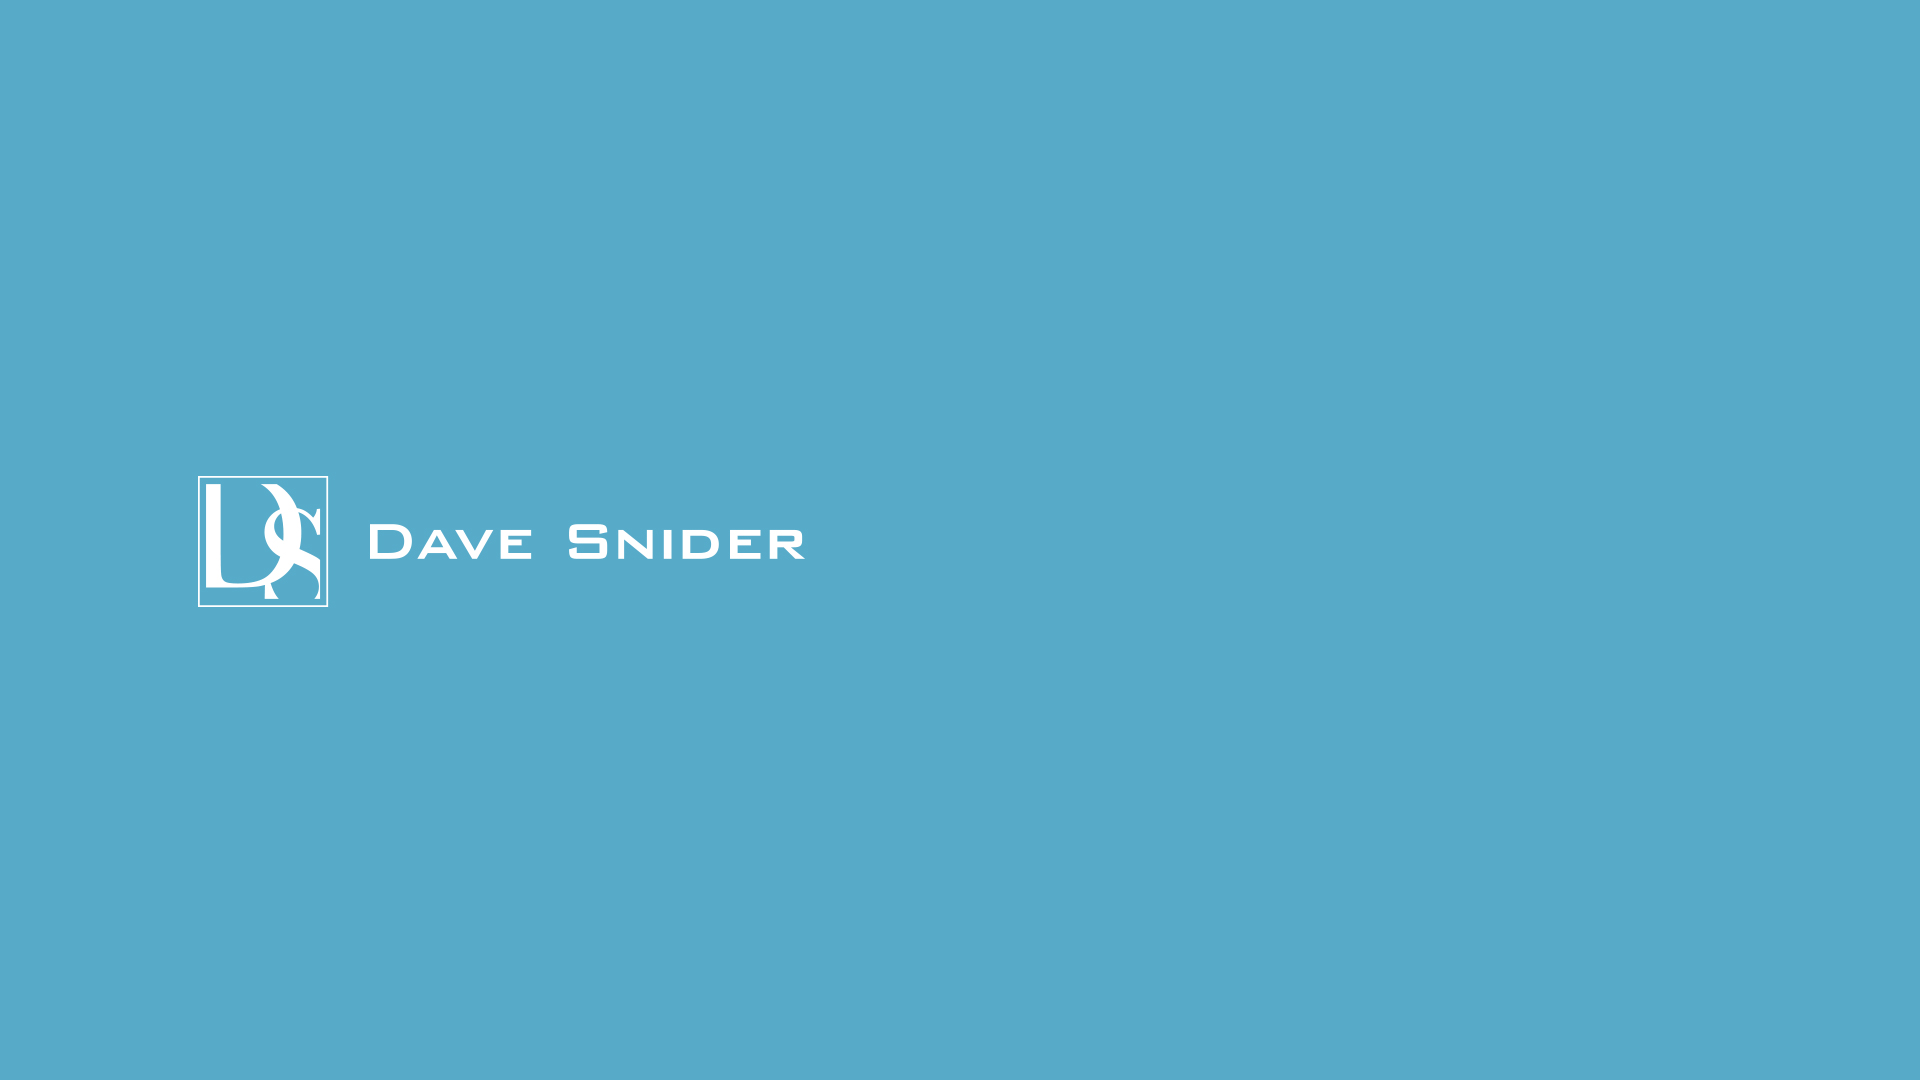 Dave Snider